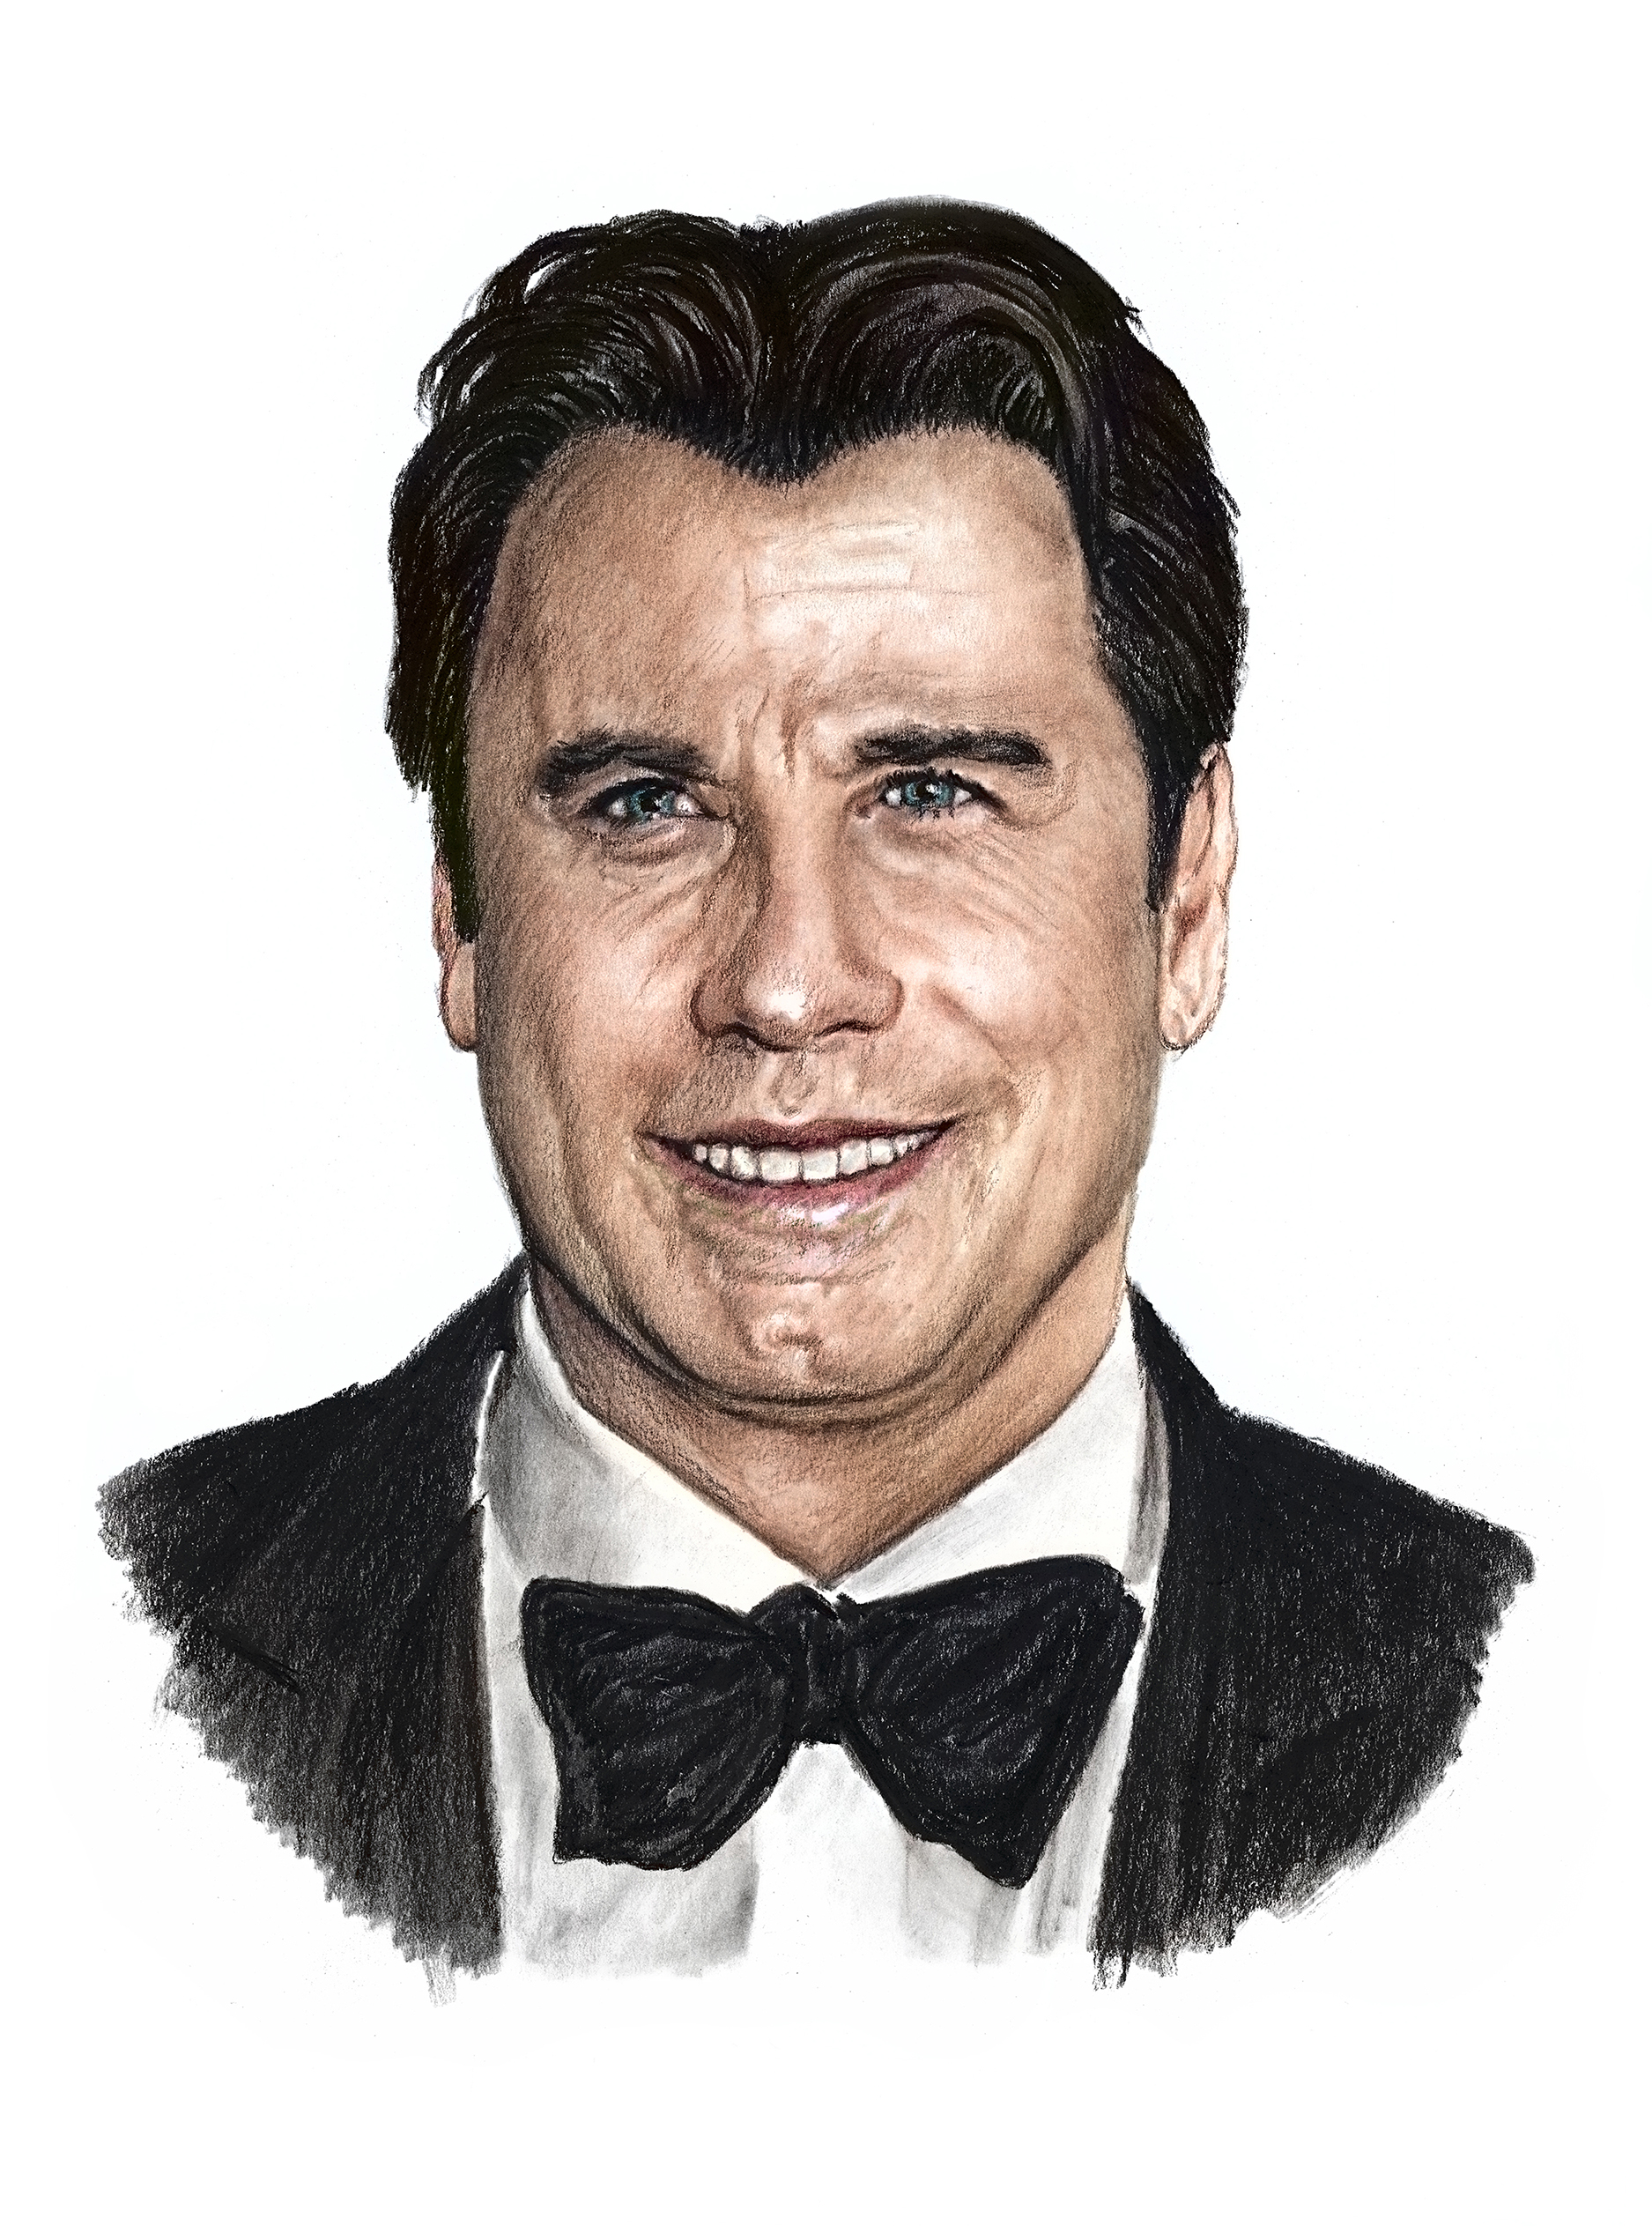 John Travolta - reprodukce kresby, kolorovaná